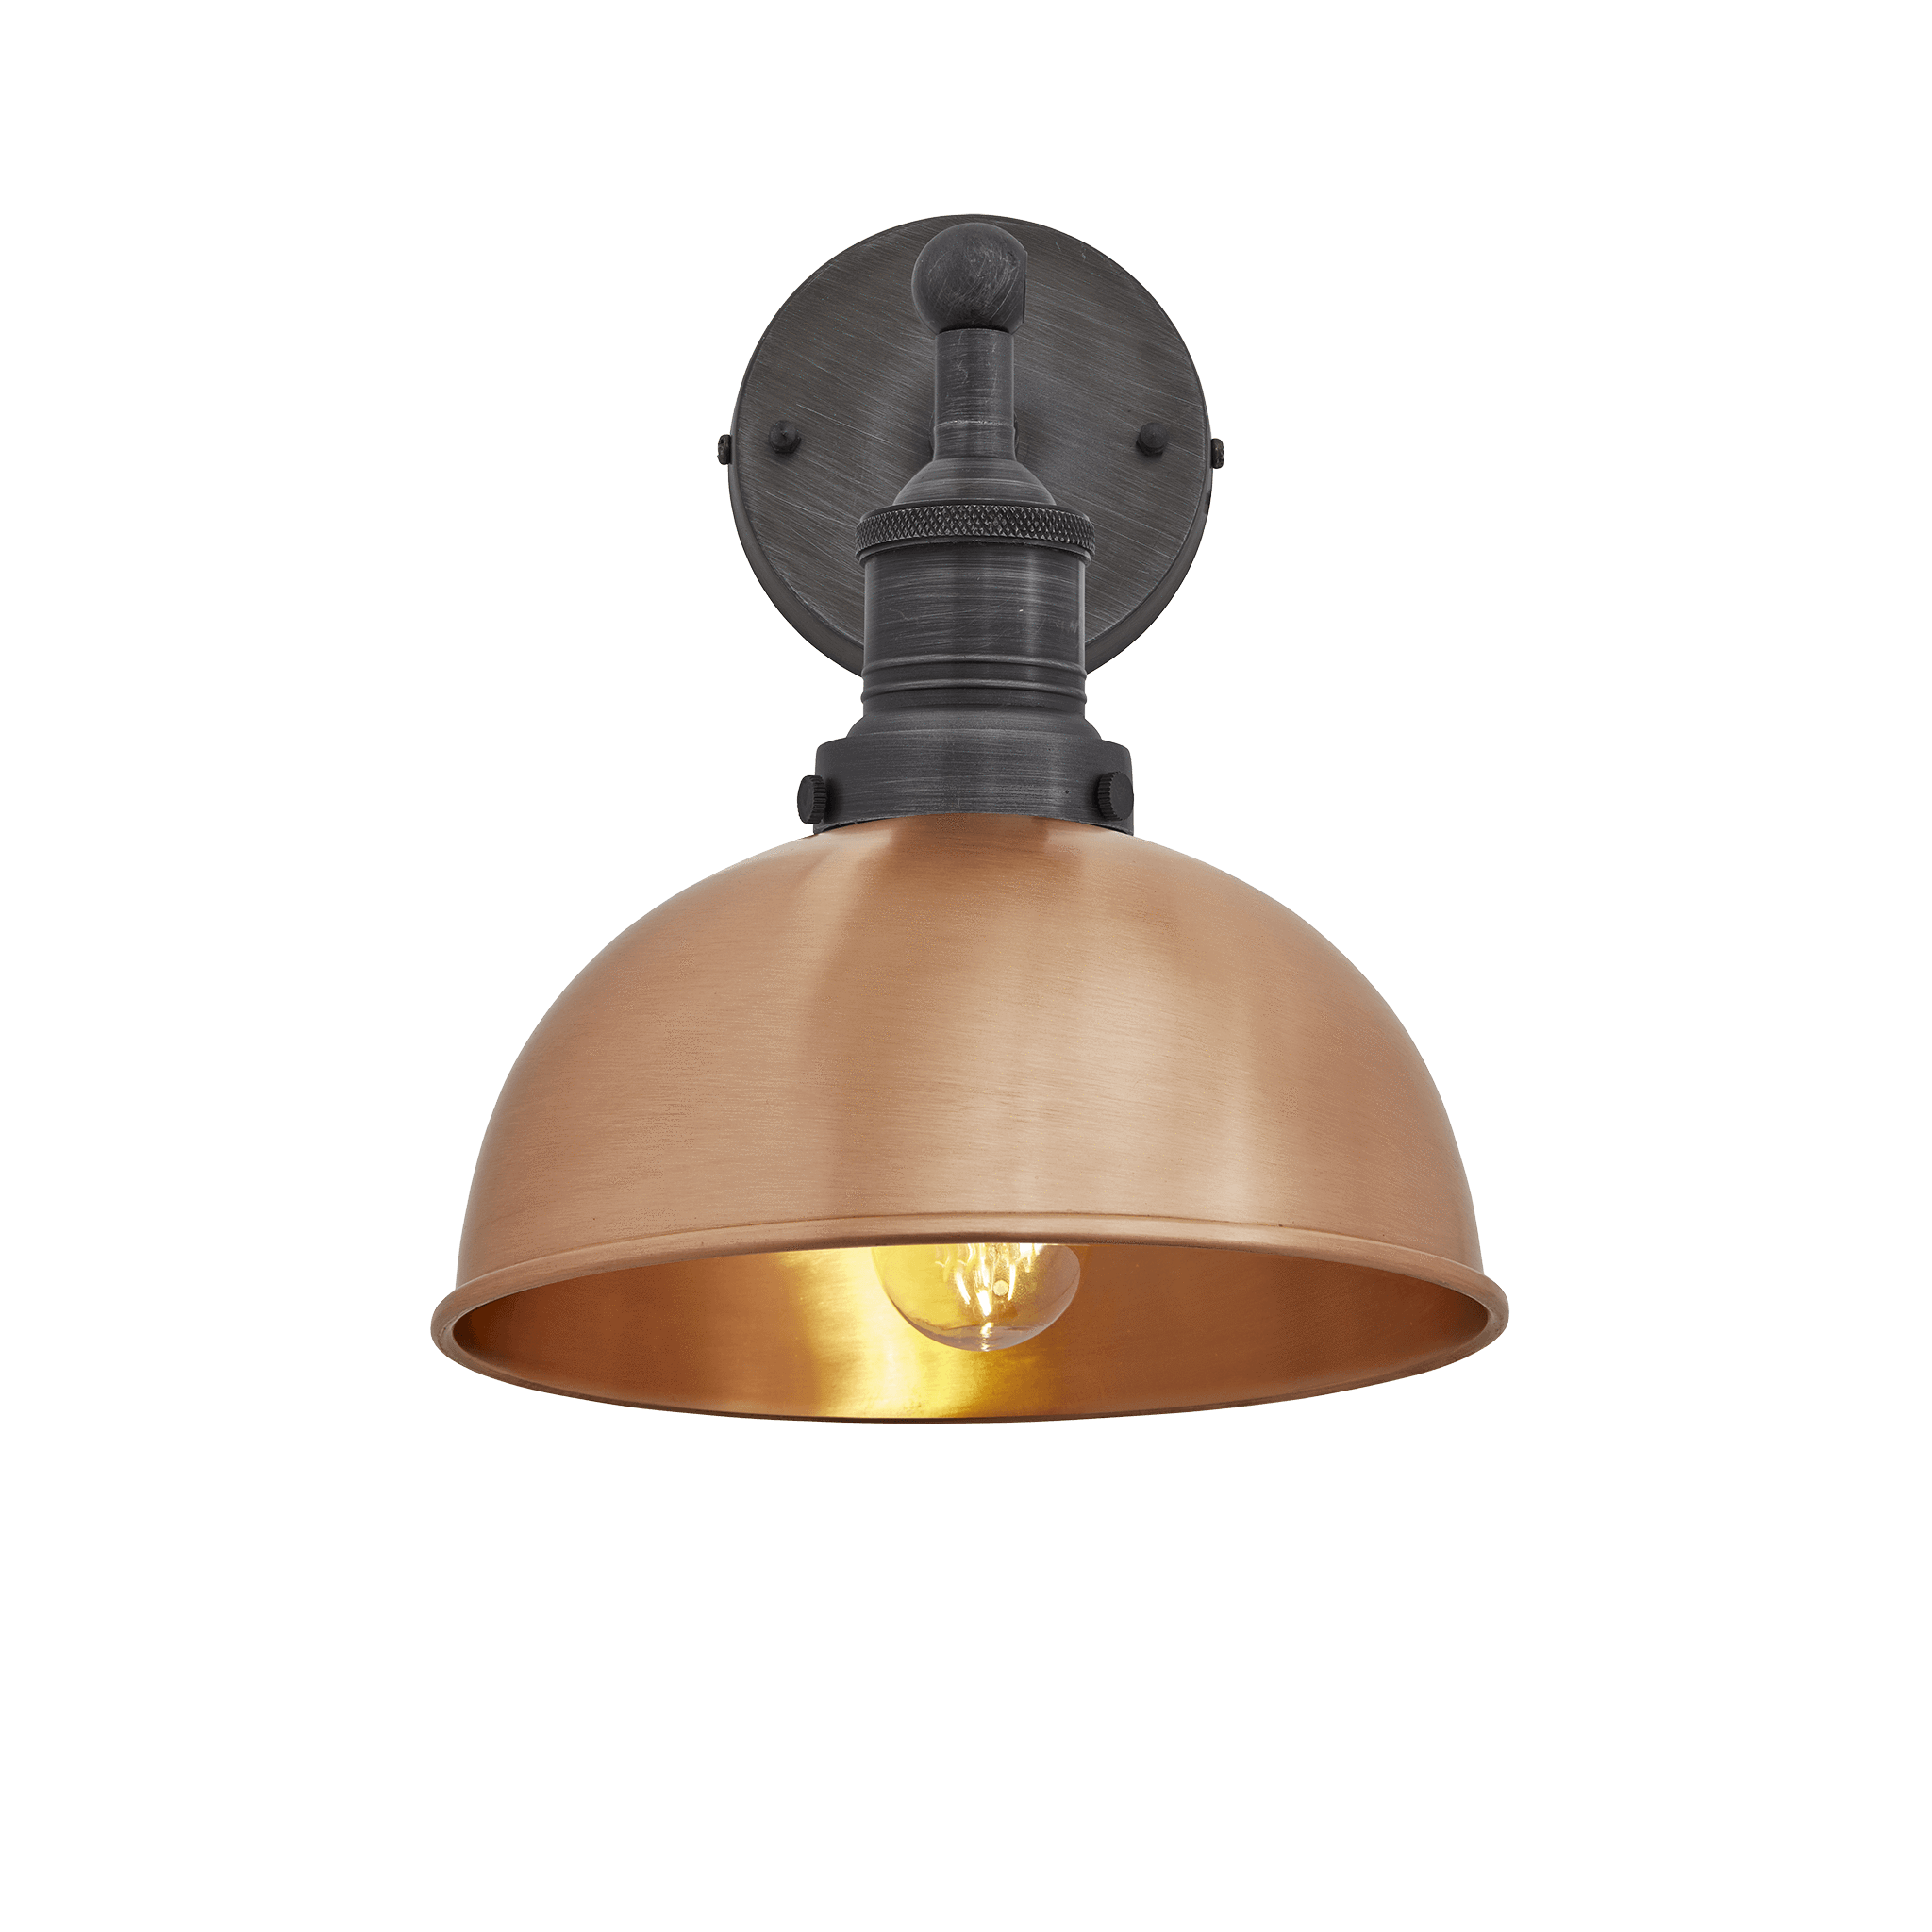 Industville – Brooklyn Dome – 8 Inch – Wall Light Fixture – Copper / Black Colour – Copper / Brass Material – 26.5 CM X 20 CM X 28 CM